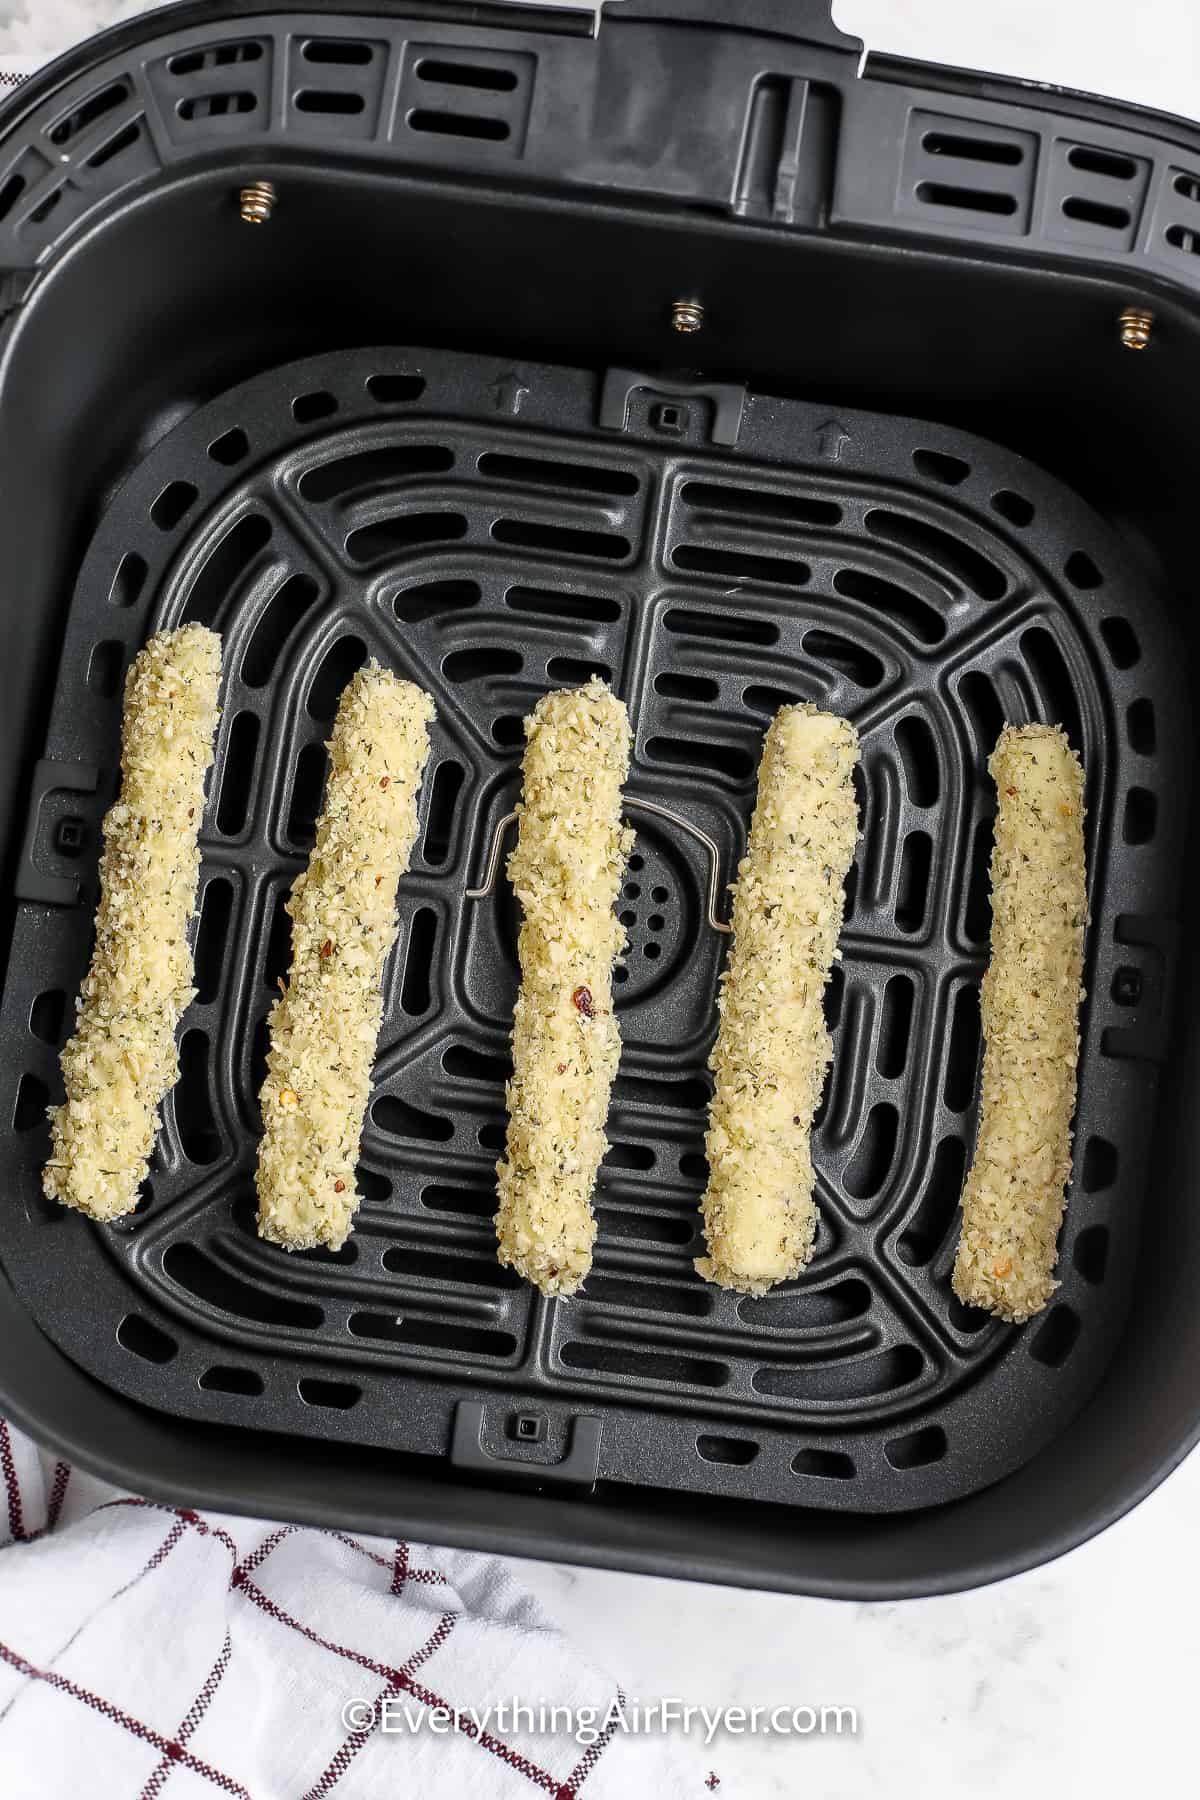 Prepped Mozzarella Sticks in an Air Fryer basket